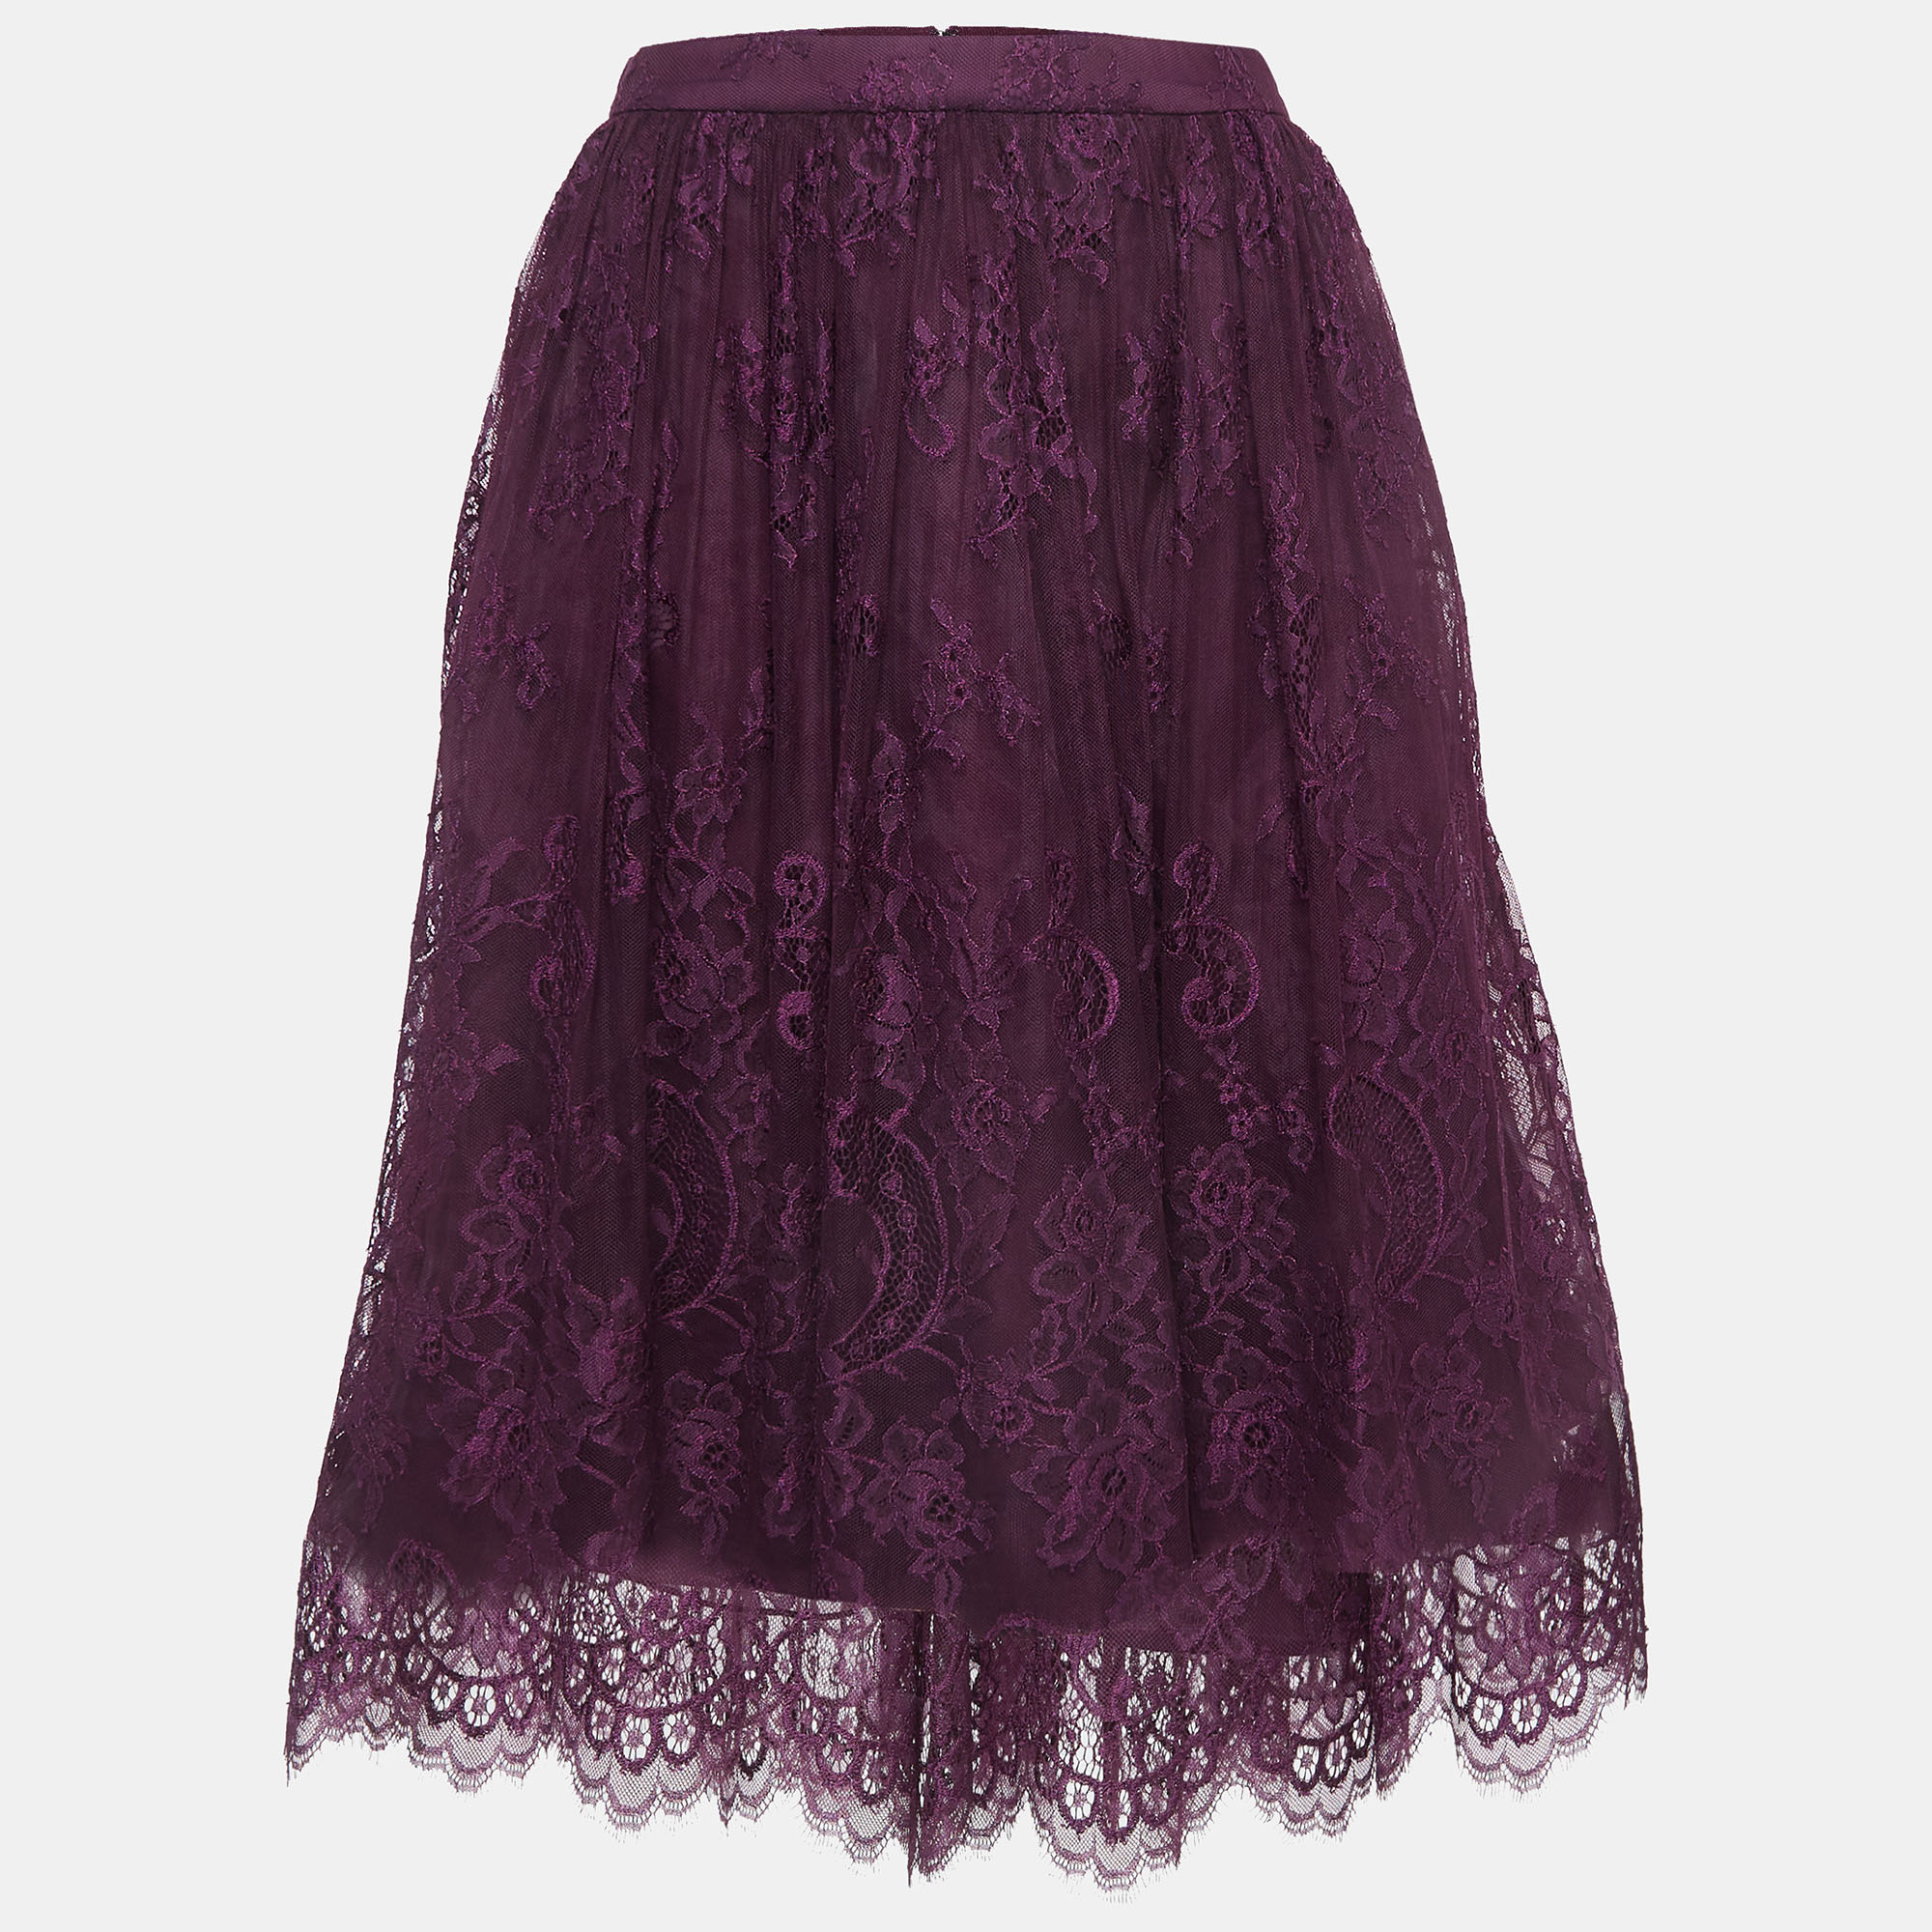 Alice + olivia purple floral pattern lace gathered midi skirt m